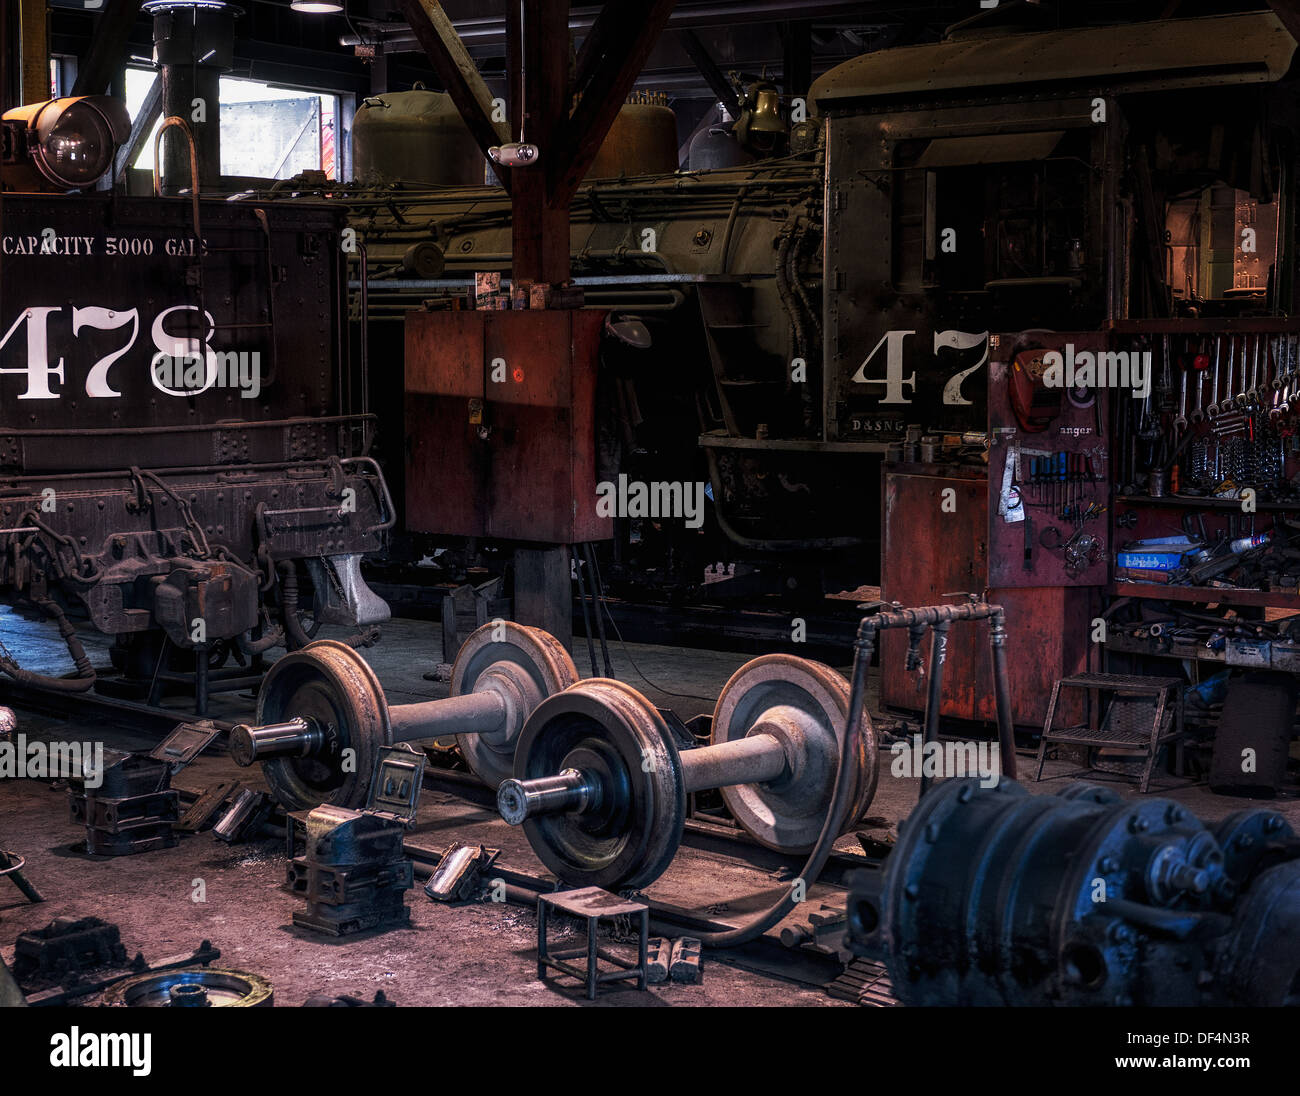 A color image of the repair shop for Durango and Silverton narrow gauge railroad in Durango Colorado Stock Photo